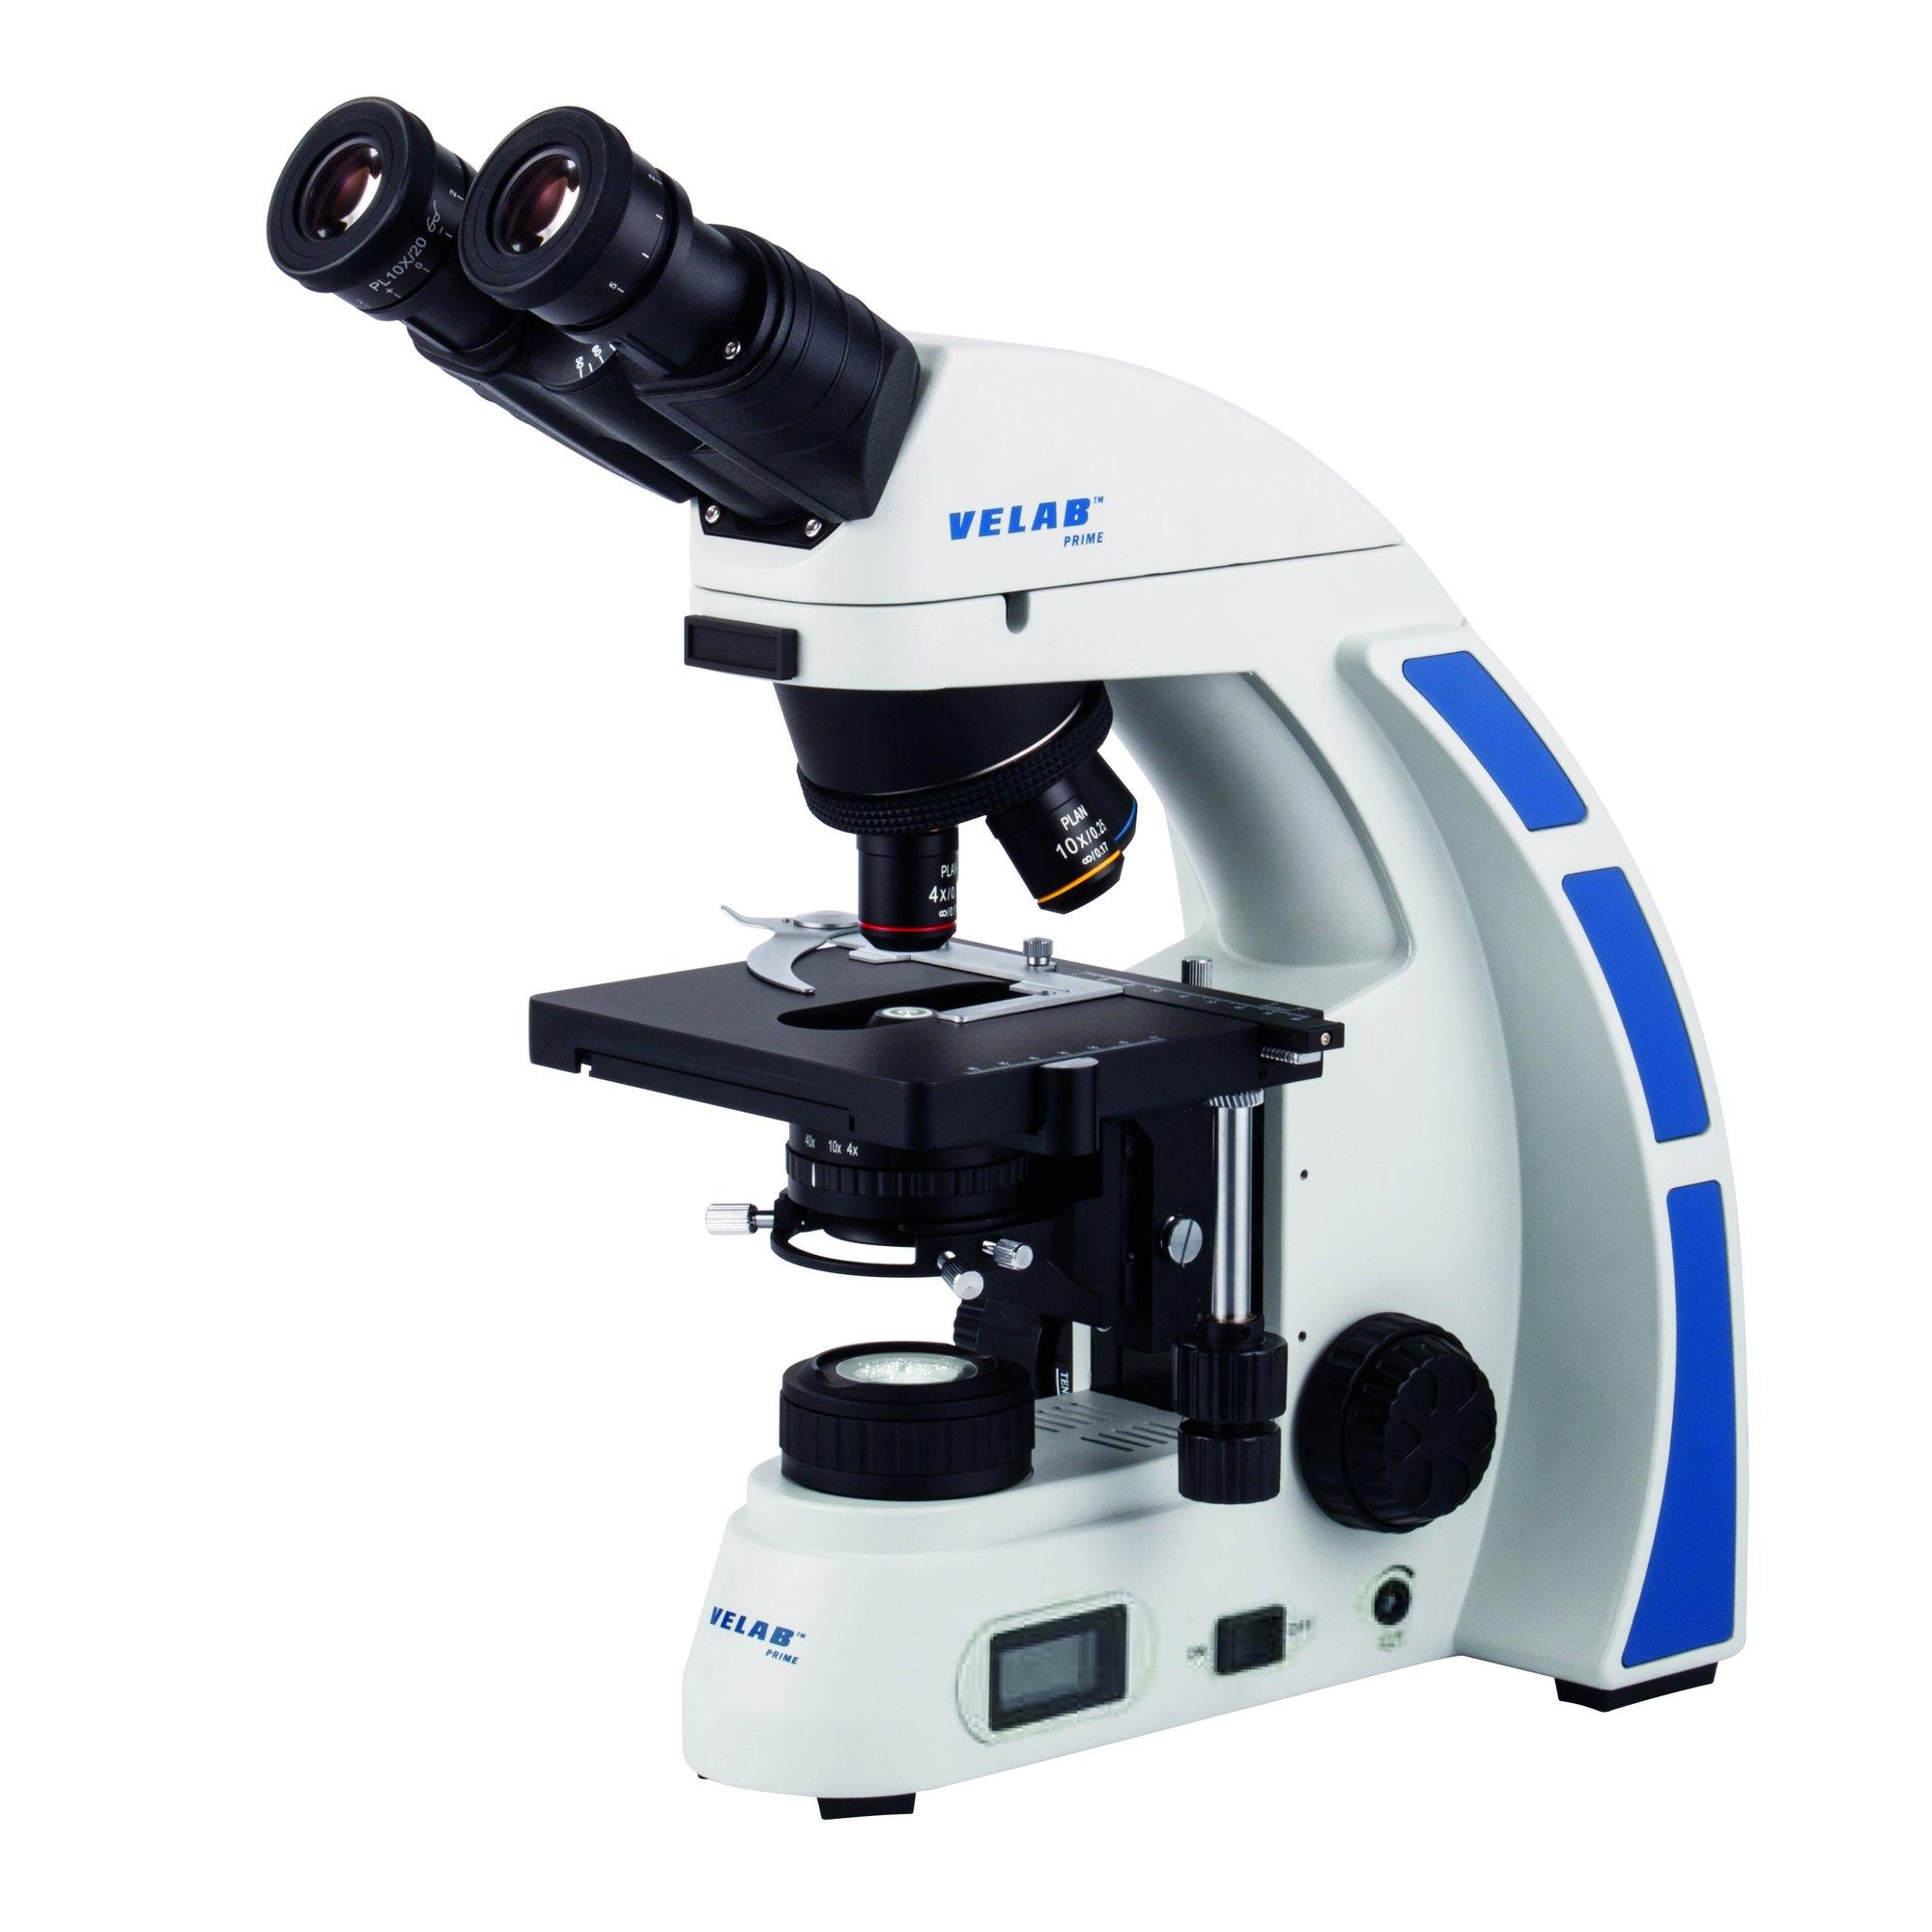 Velab VE-B310 Biological Binocular Microscope with Plan Achromatic Objectives